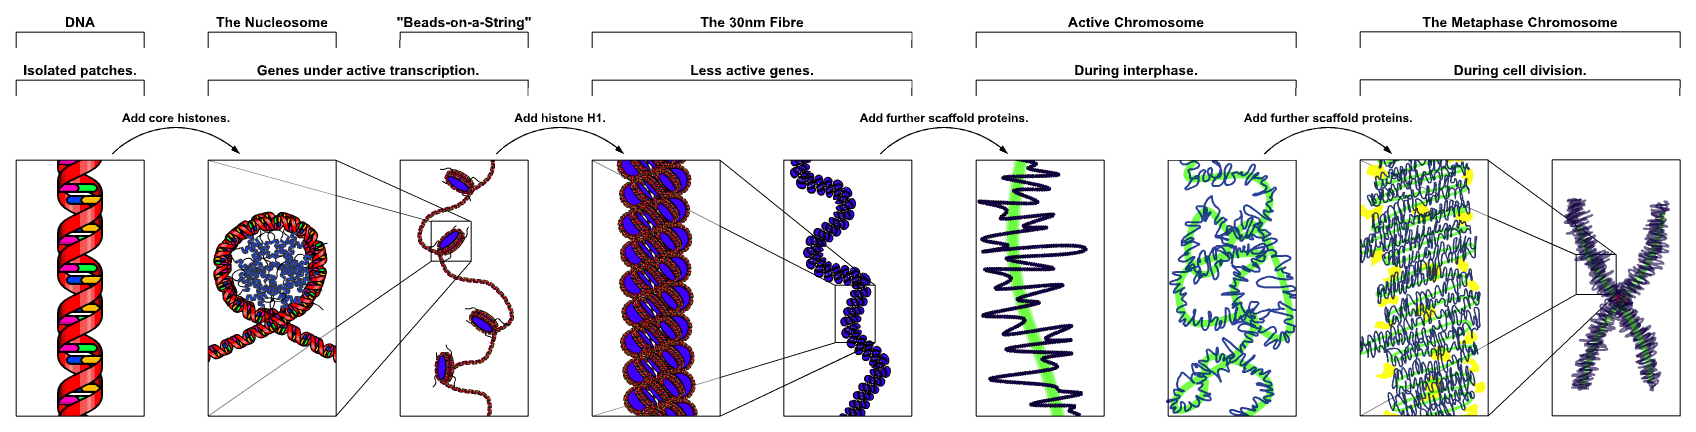 chromatin structures